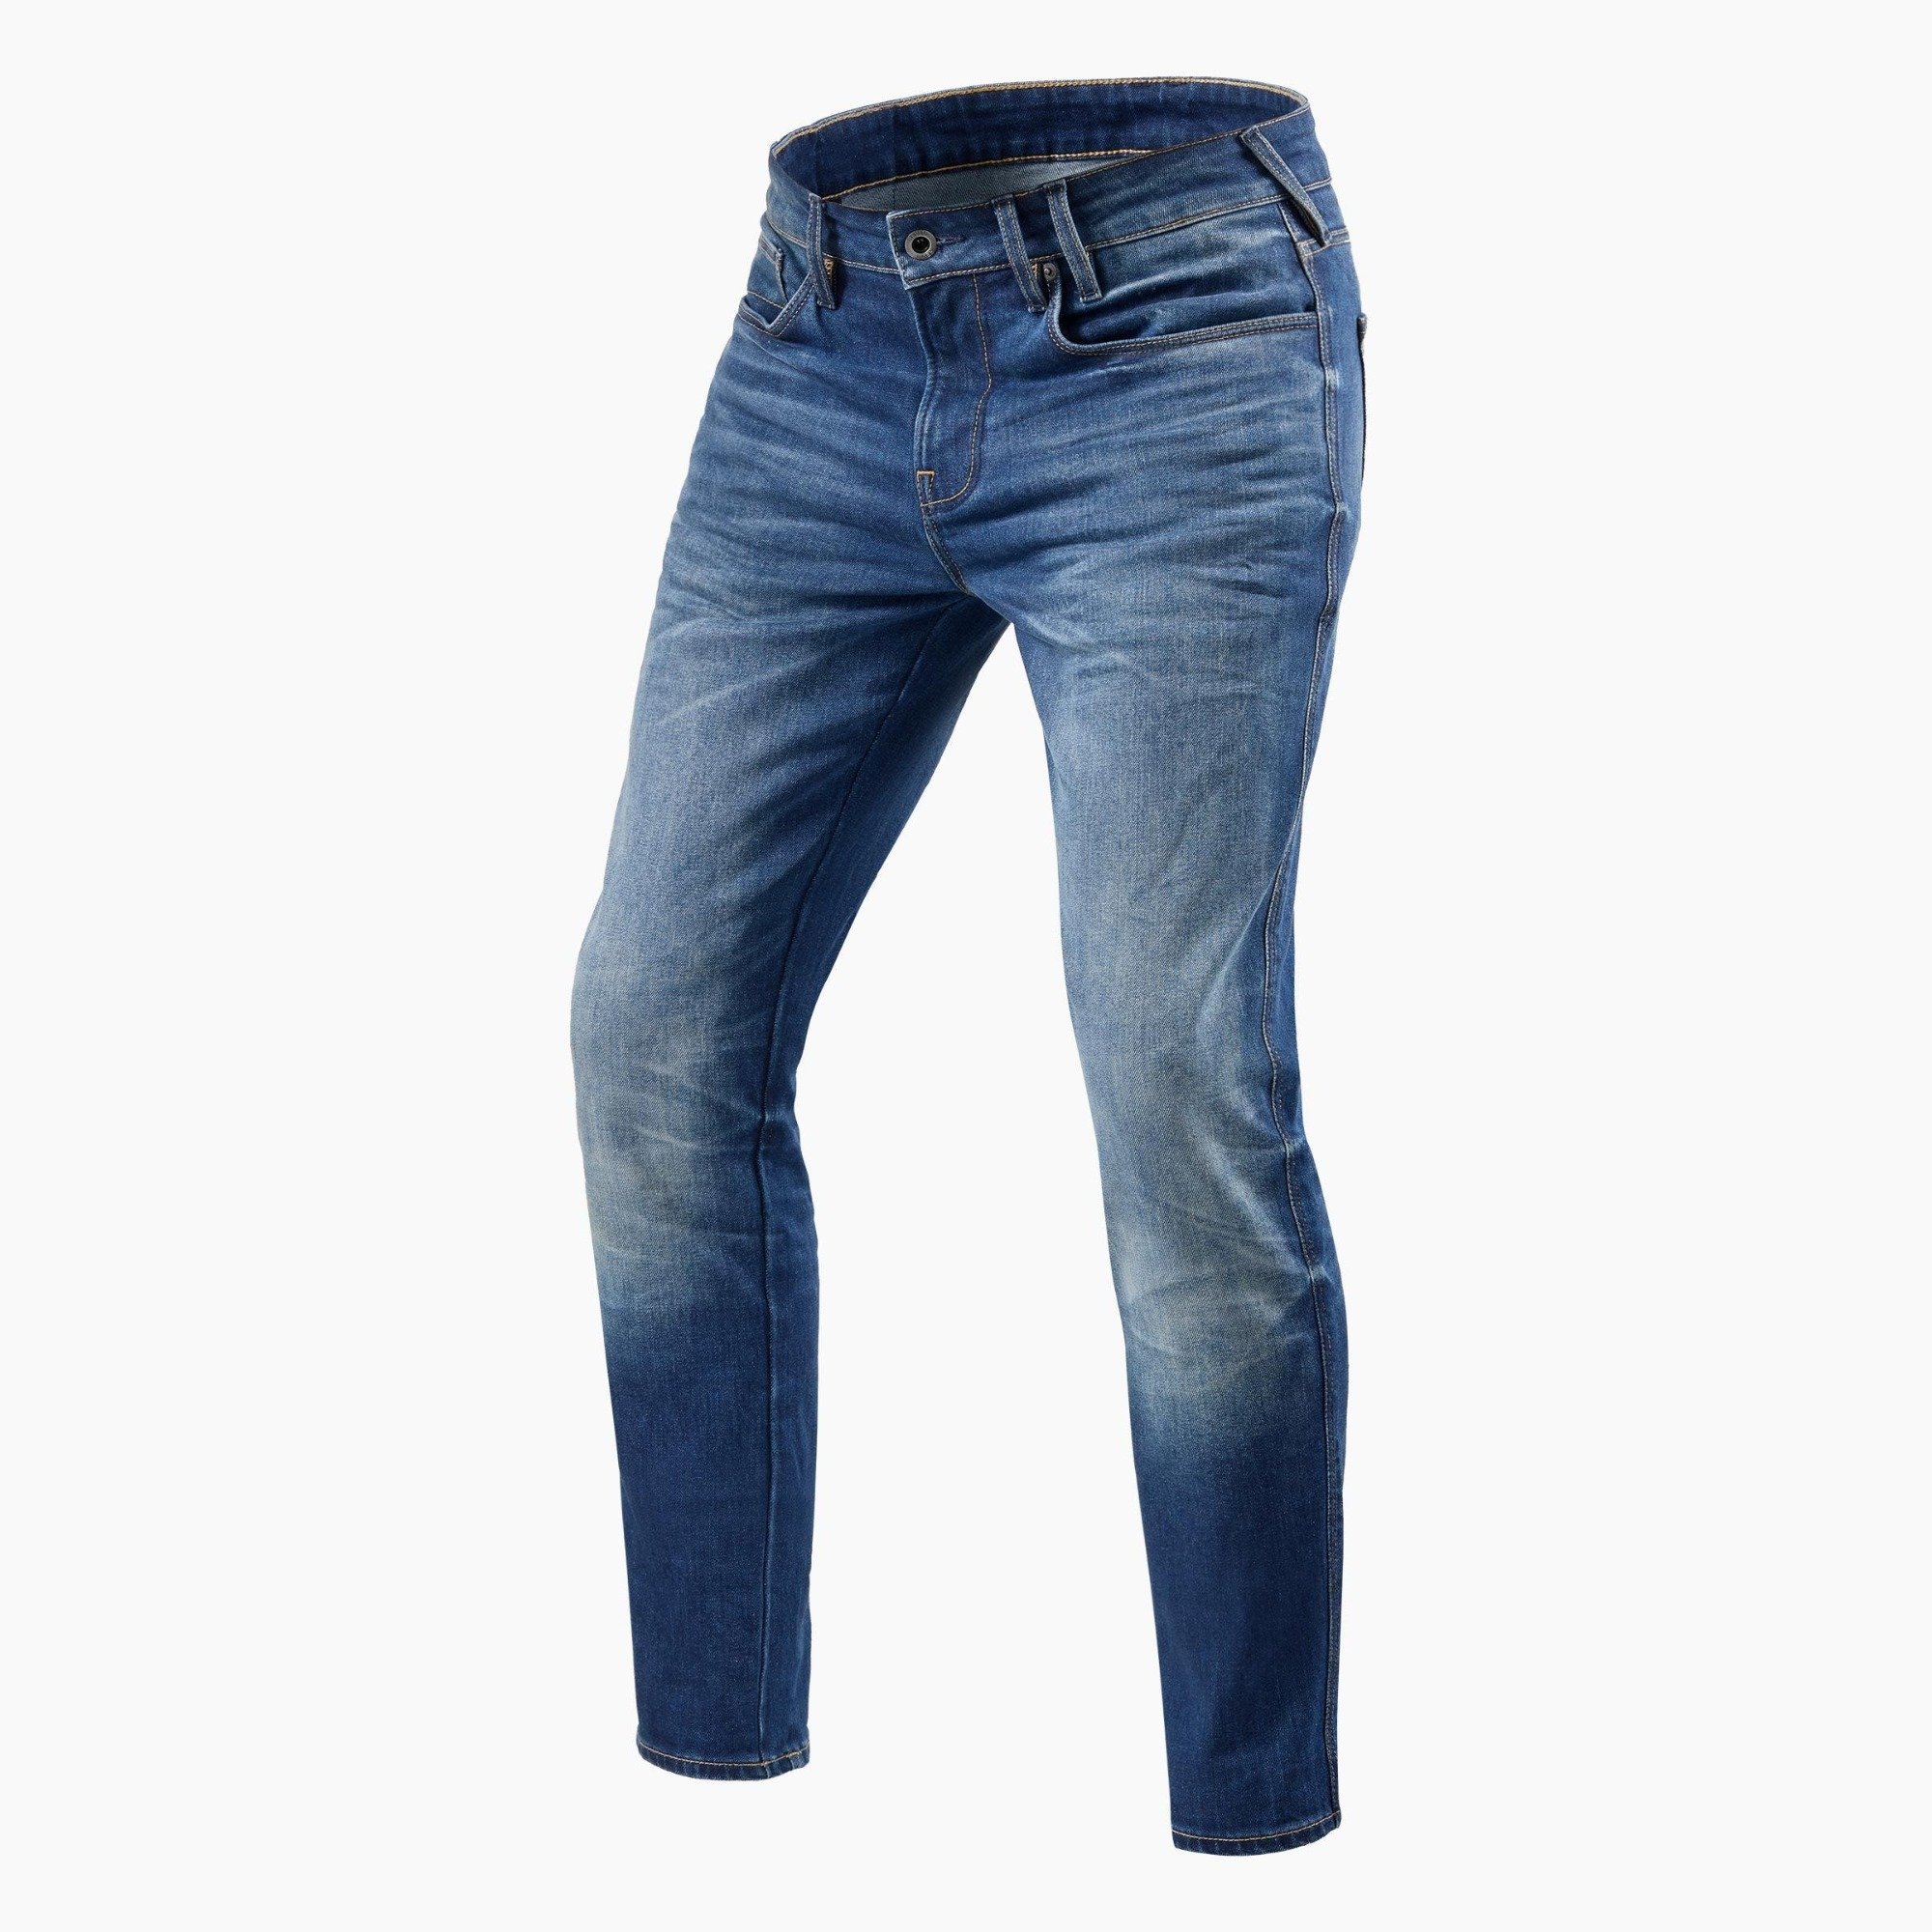 Image of REV'IT! Jeans Carlin SK Mid Blue Used Motorcycle Jeans Size L36/W33 EN